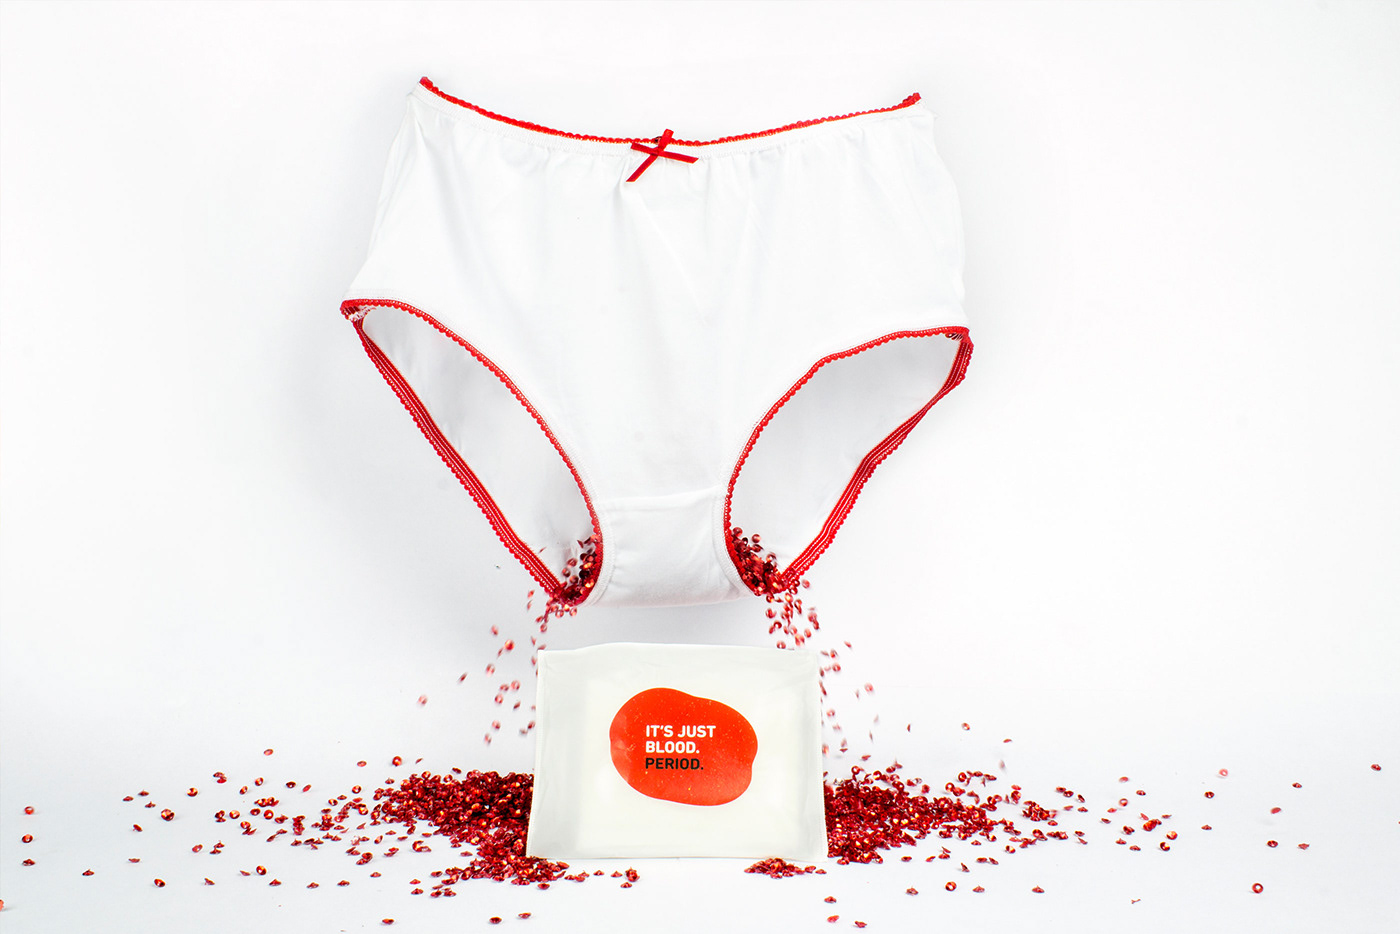 Sanitary Pad Packaging social taboos menstruation donthideitperiod NH1Design sanitary pads Design for Good Neha Tulsian Pallavi Mohan Packaging